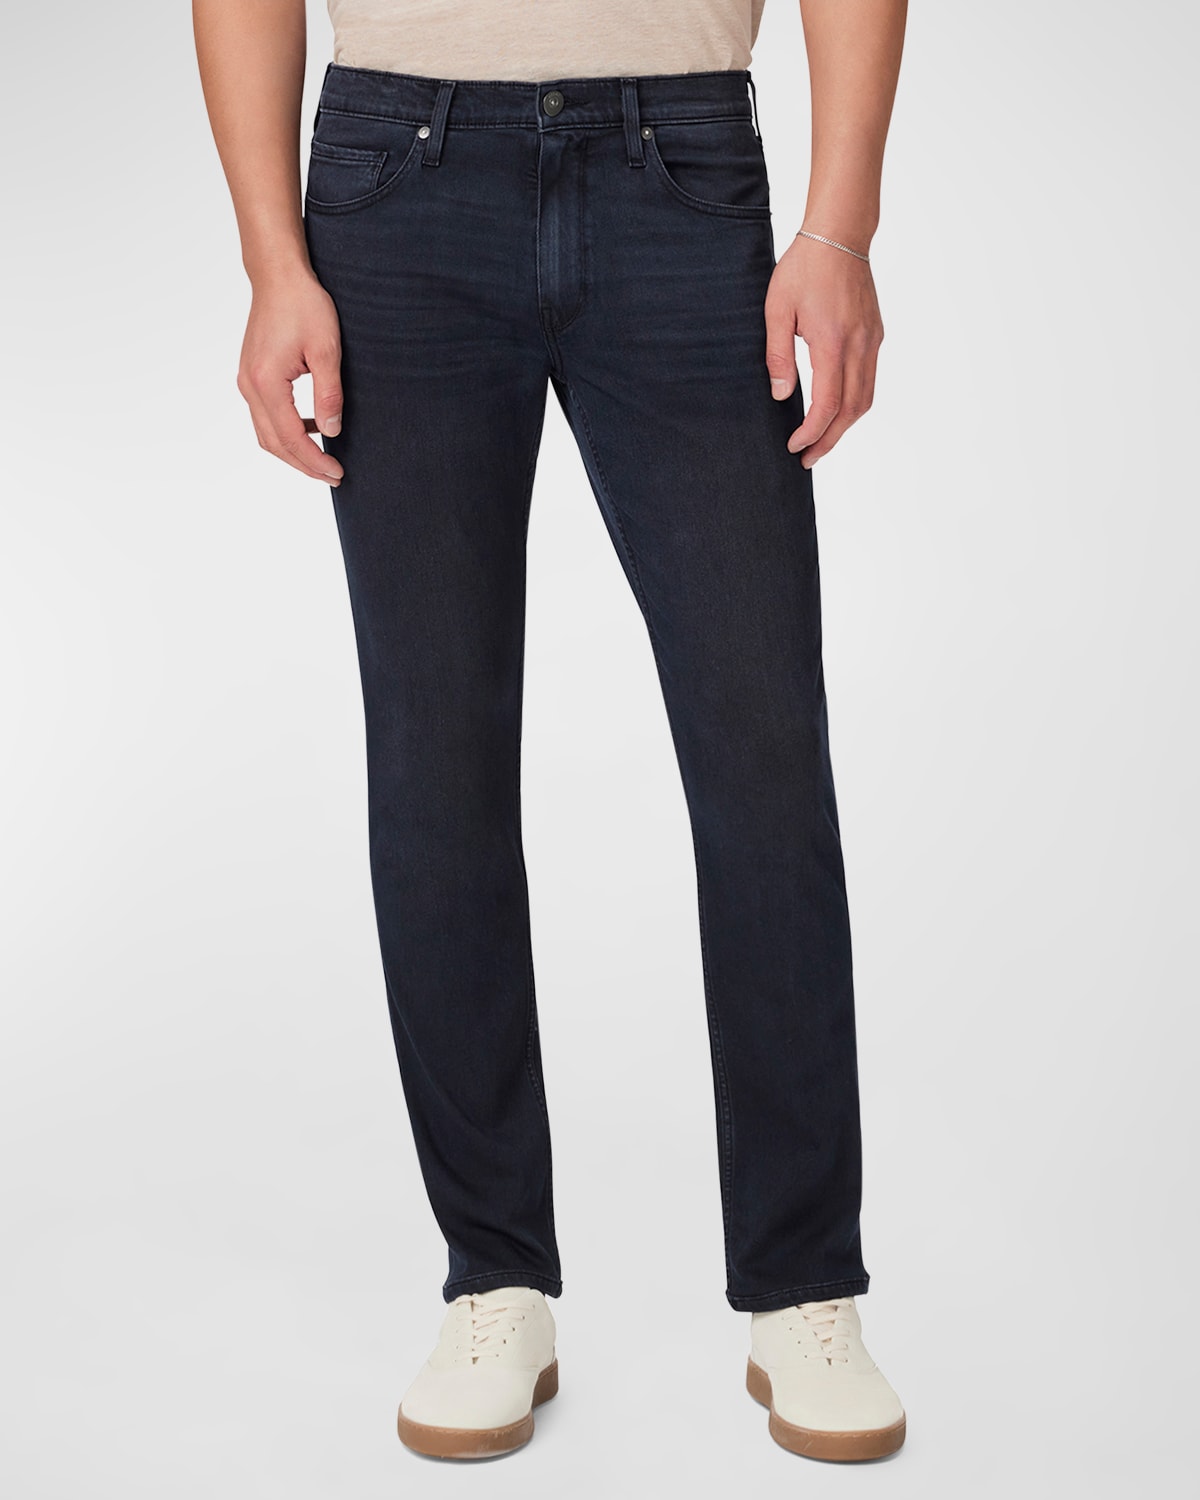 Men's Federal Slim-Straight Jeans